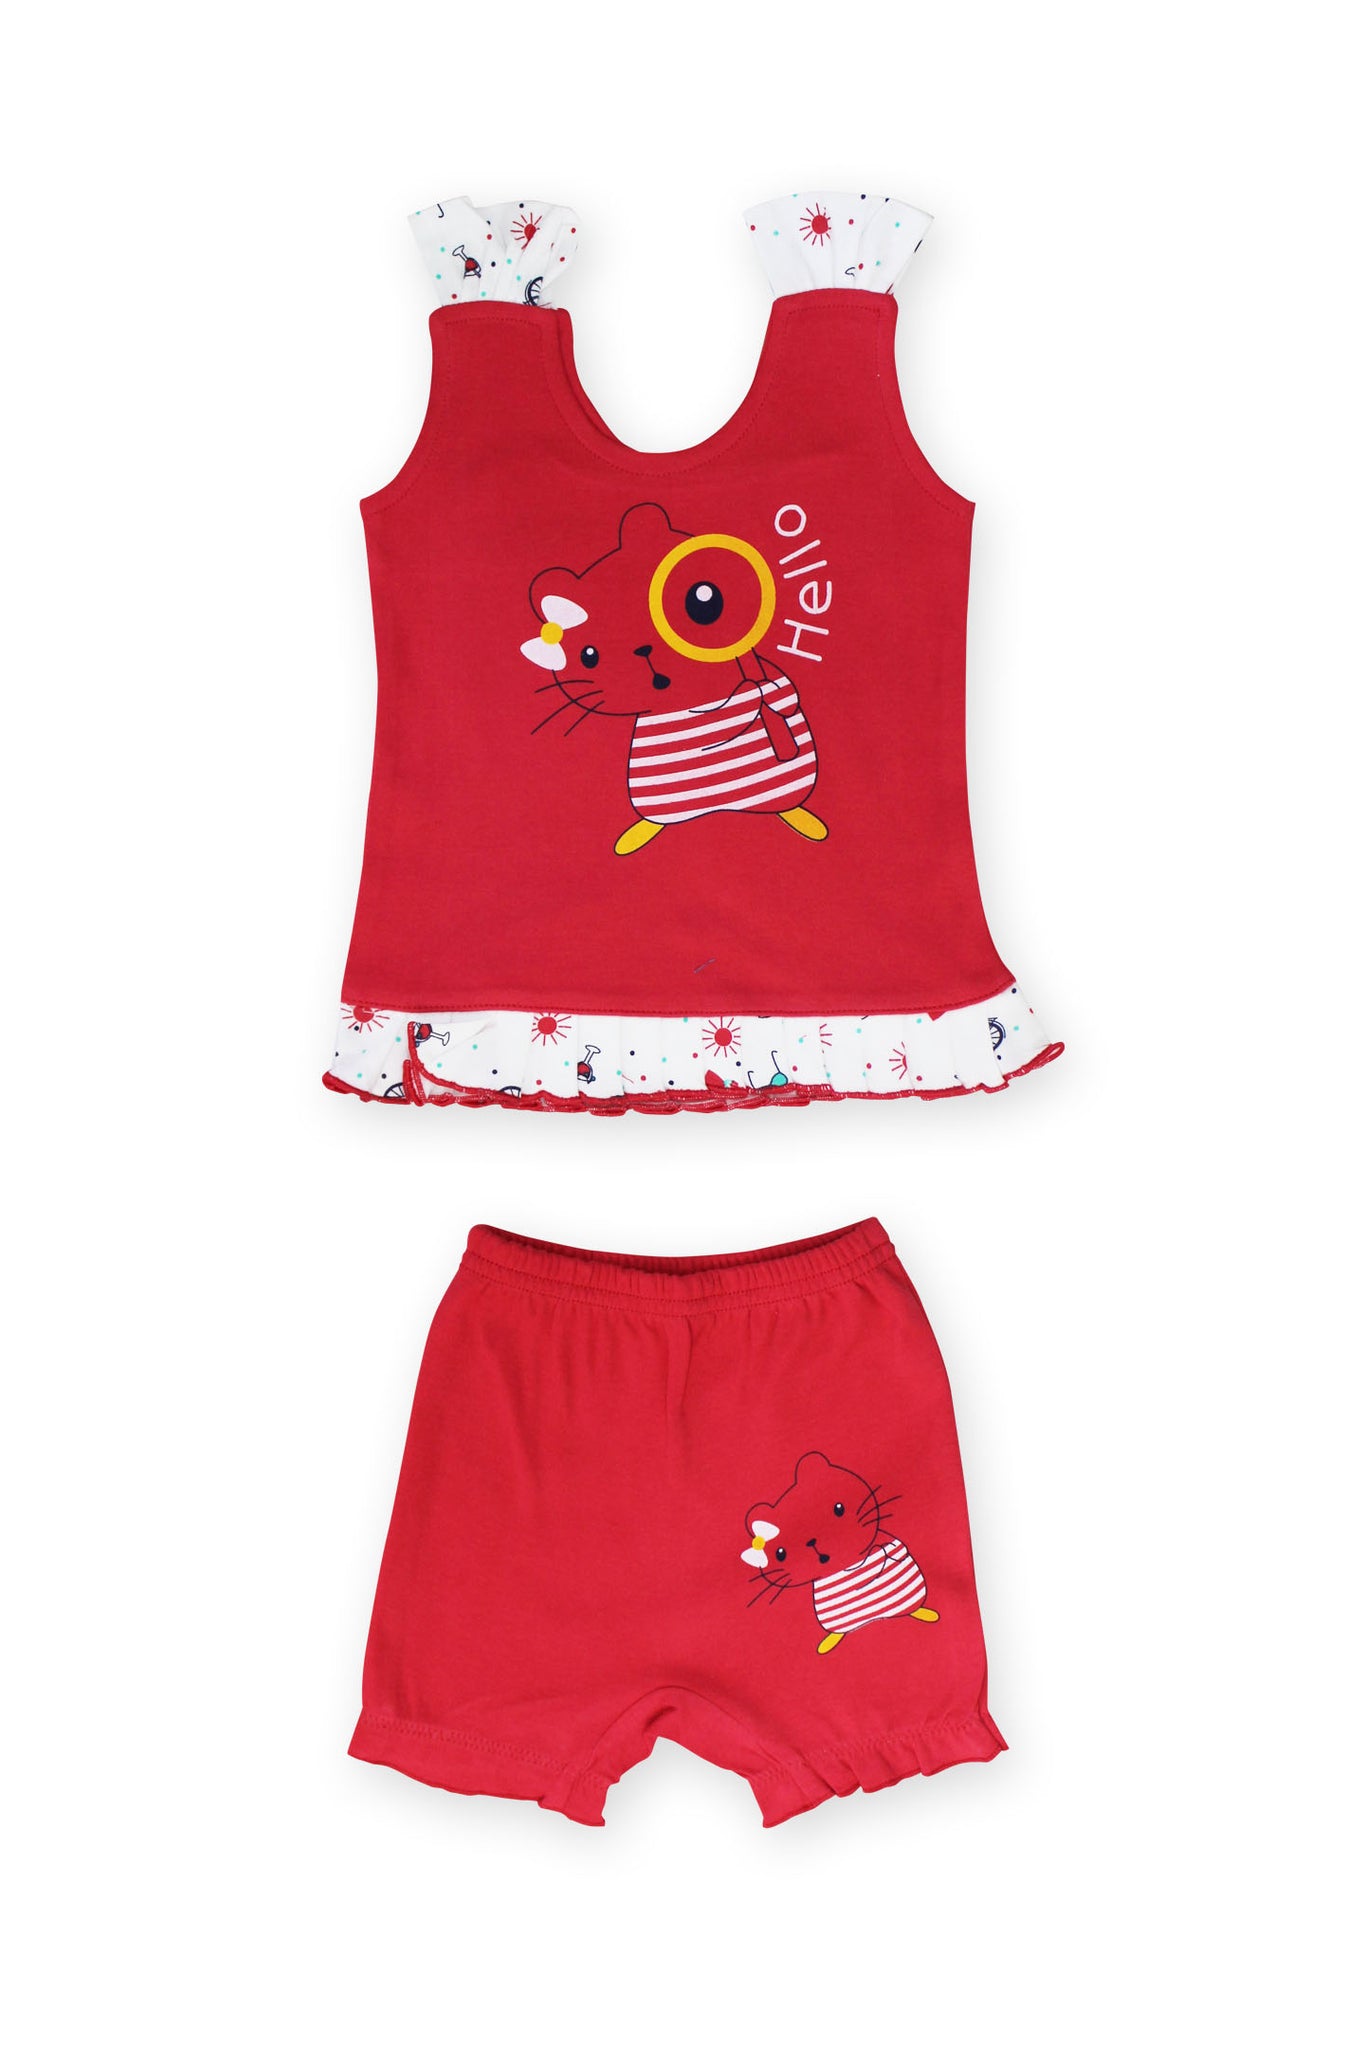 Selvas Infant Girls set top with shorts - 163